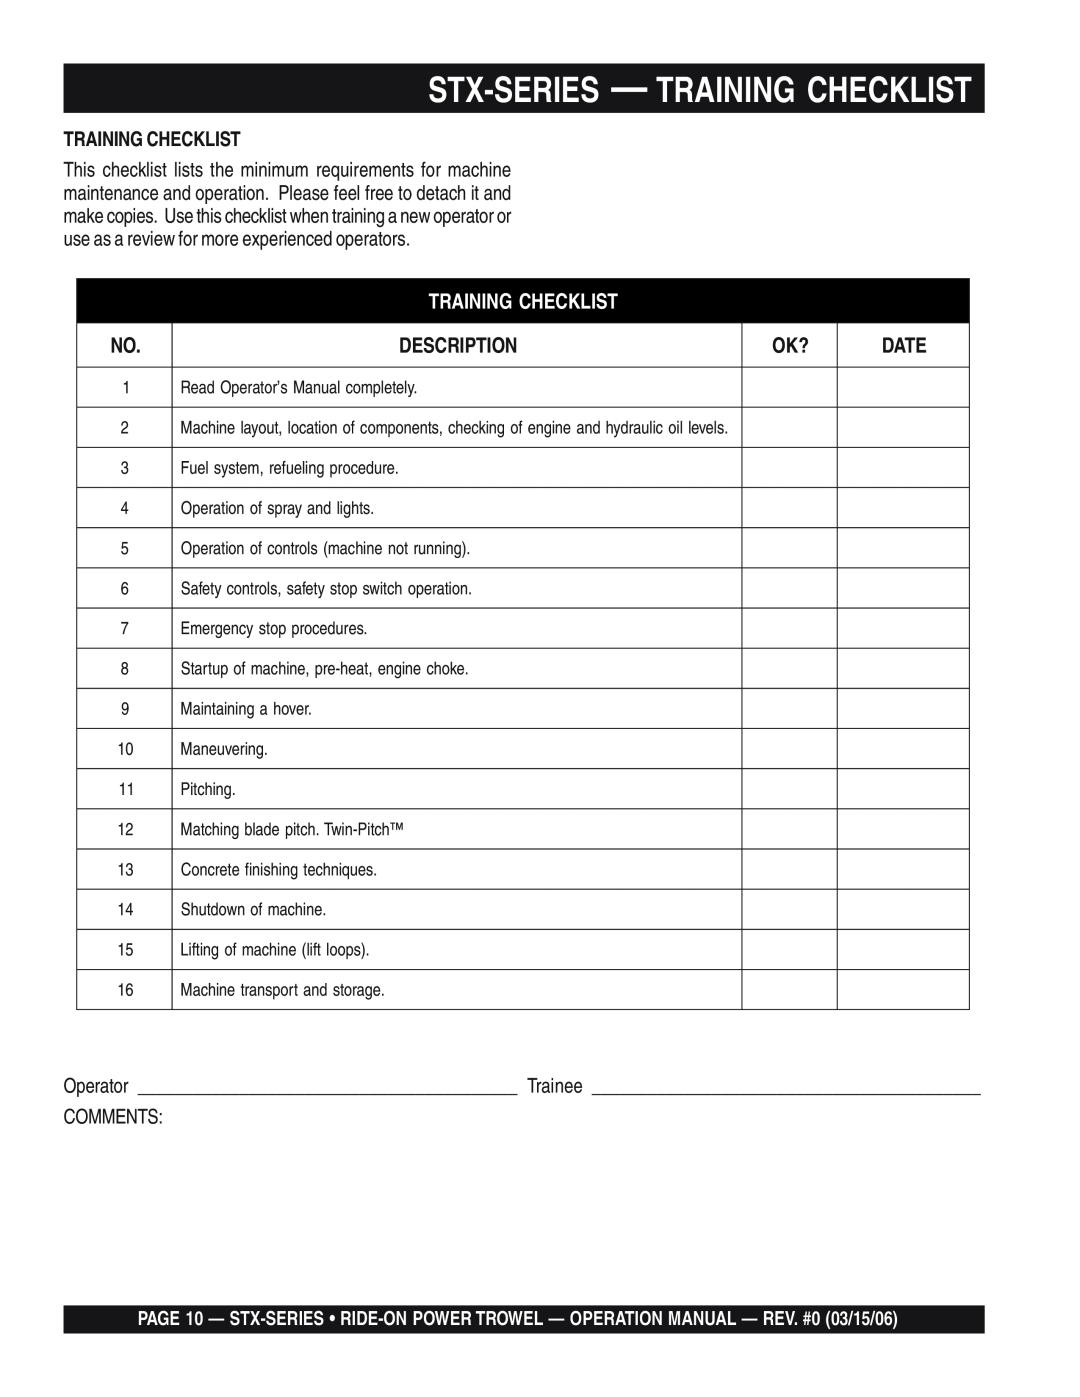 Multiquip STX55Y6 operation manual Stx-Series - Training Checklist, Description, Date 